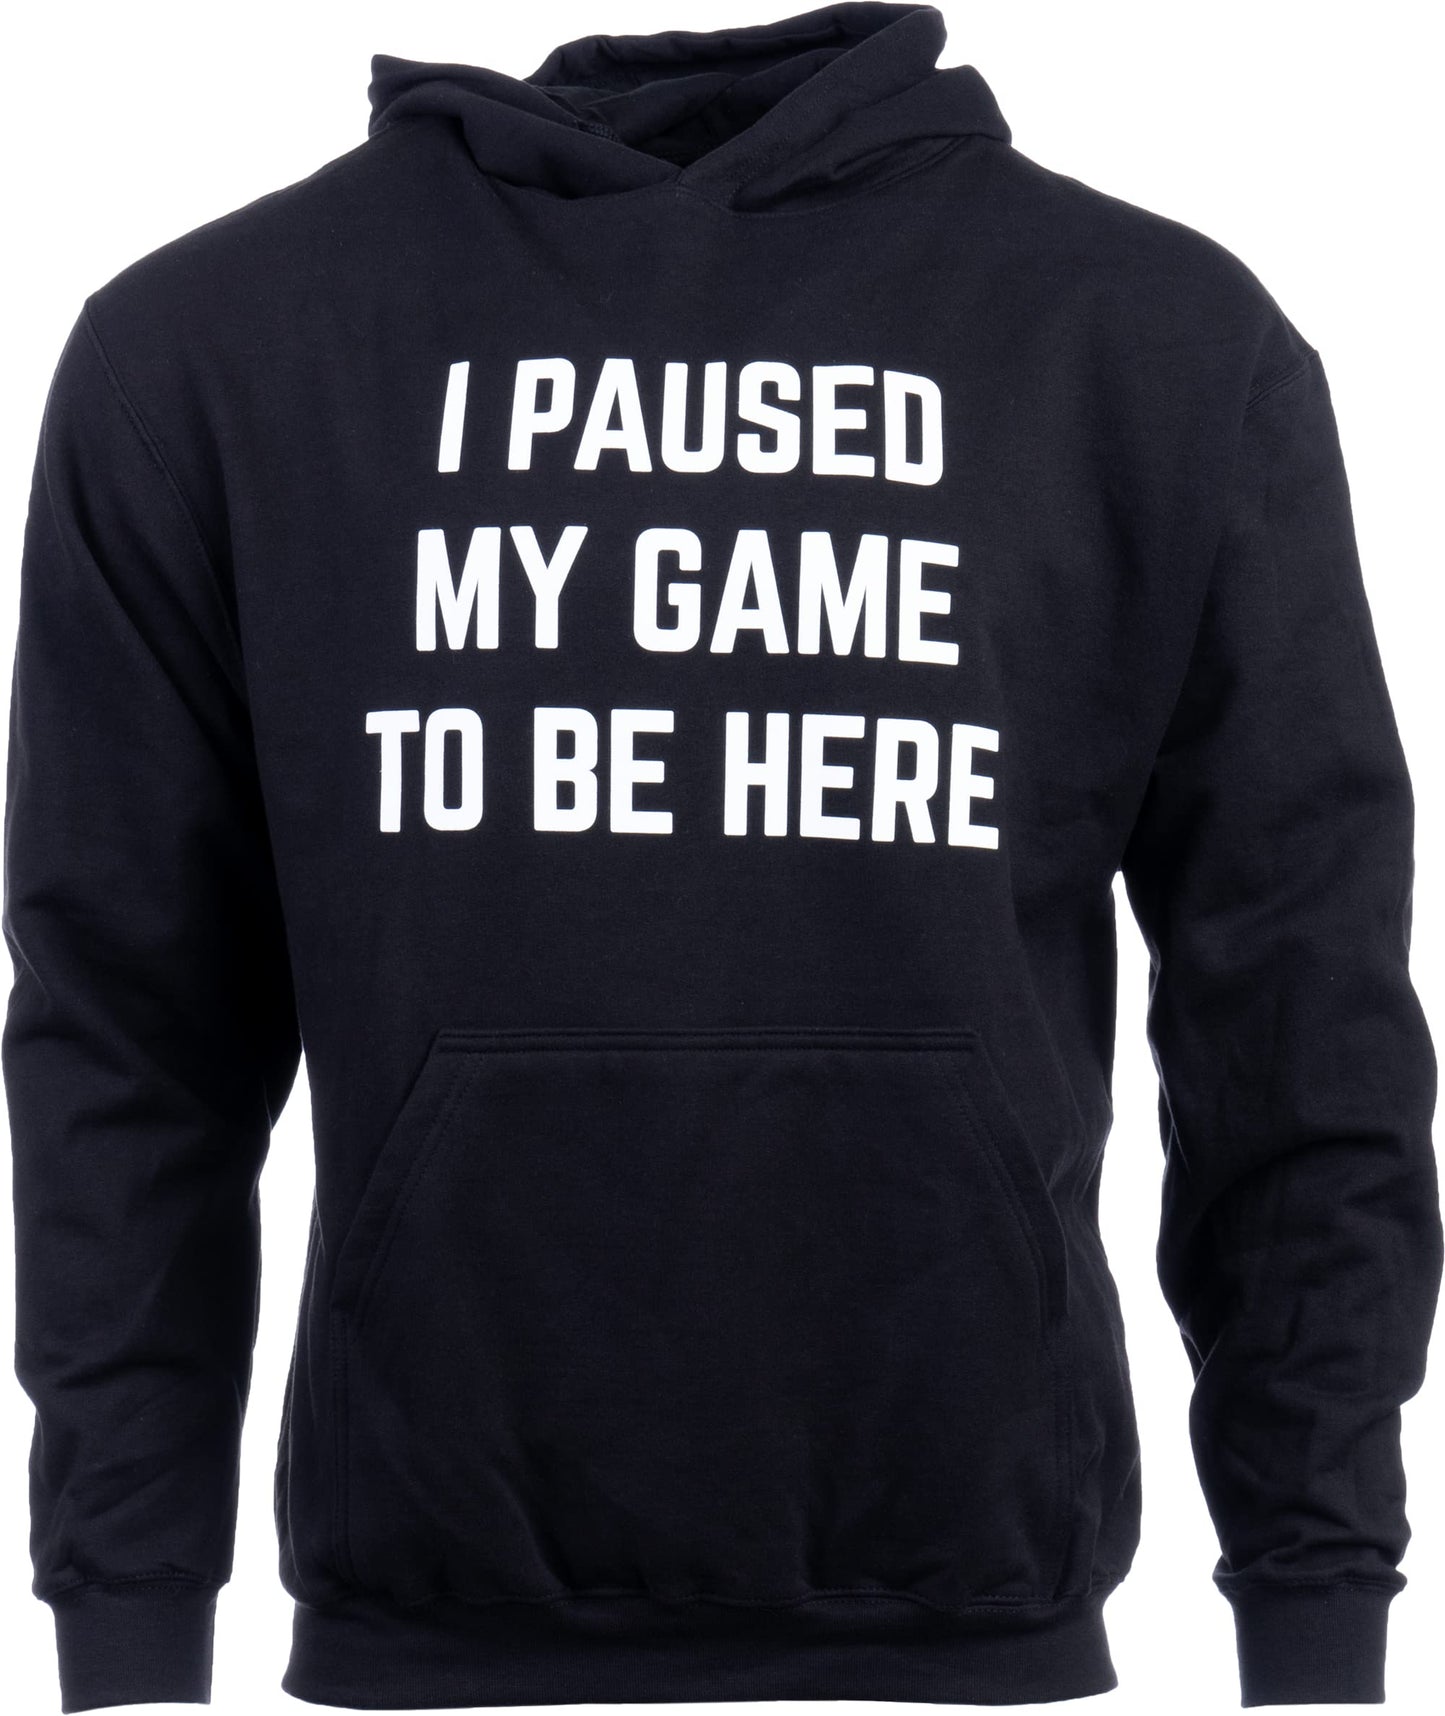 Ann Arbor T-shirt Co. I Paused my Game to Be Here | Funny Video Gamer Gaming Player Humor Joke for Men Women Hooded Sweatshirt Hoody - (Hoodie,3XL) - amzGamess